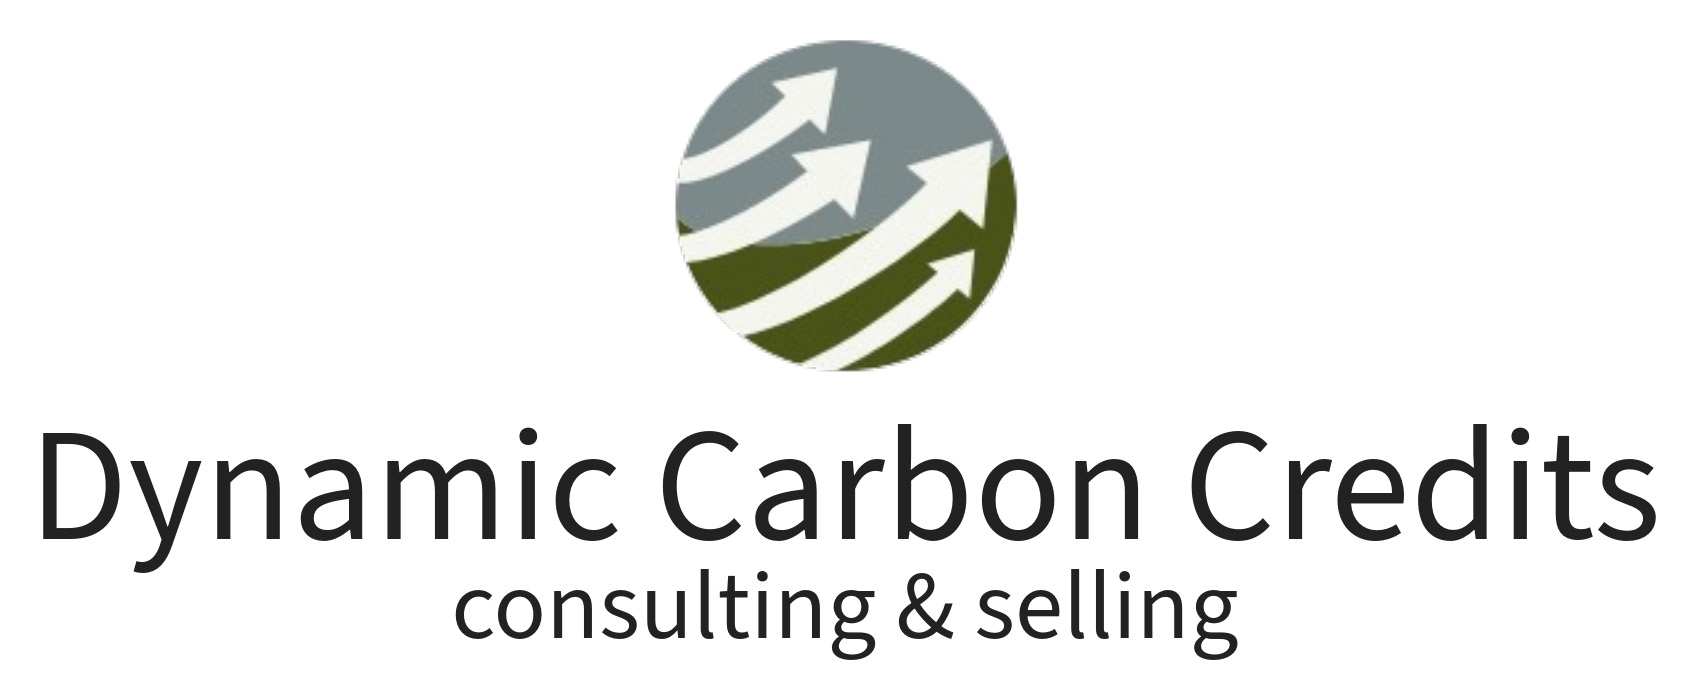 dynamic carbon credits logo